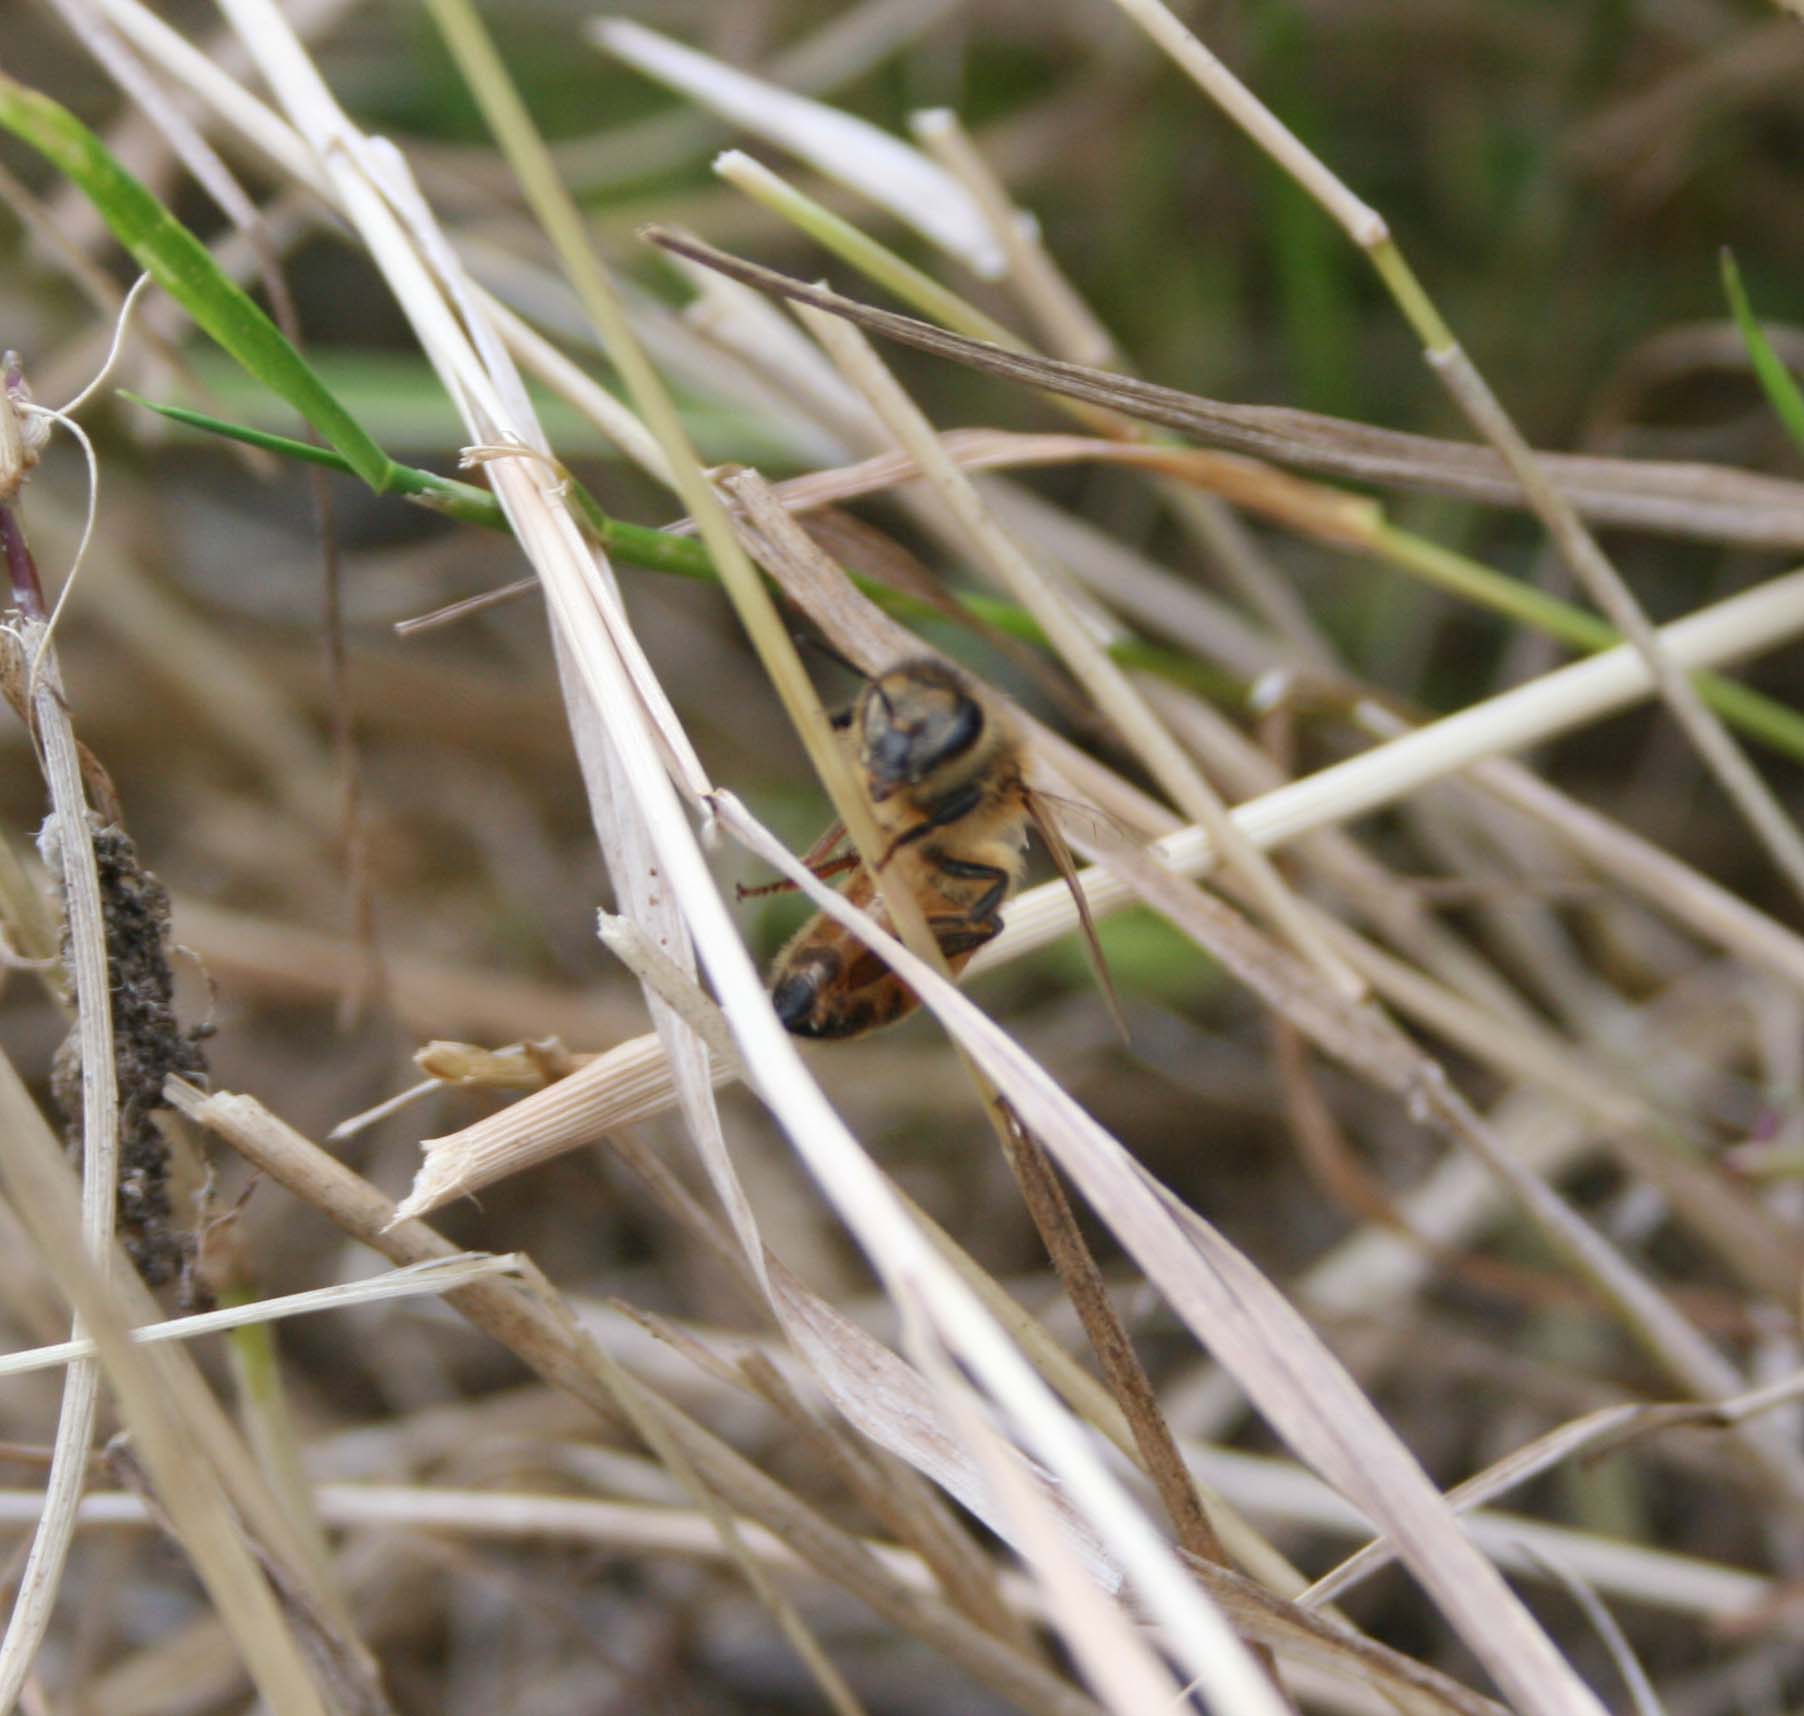 wasps-attacking-bees 079a.jpg